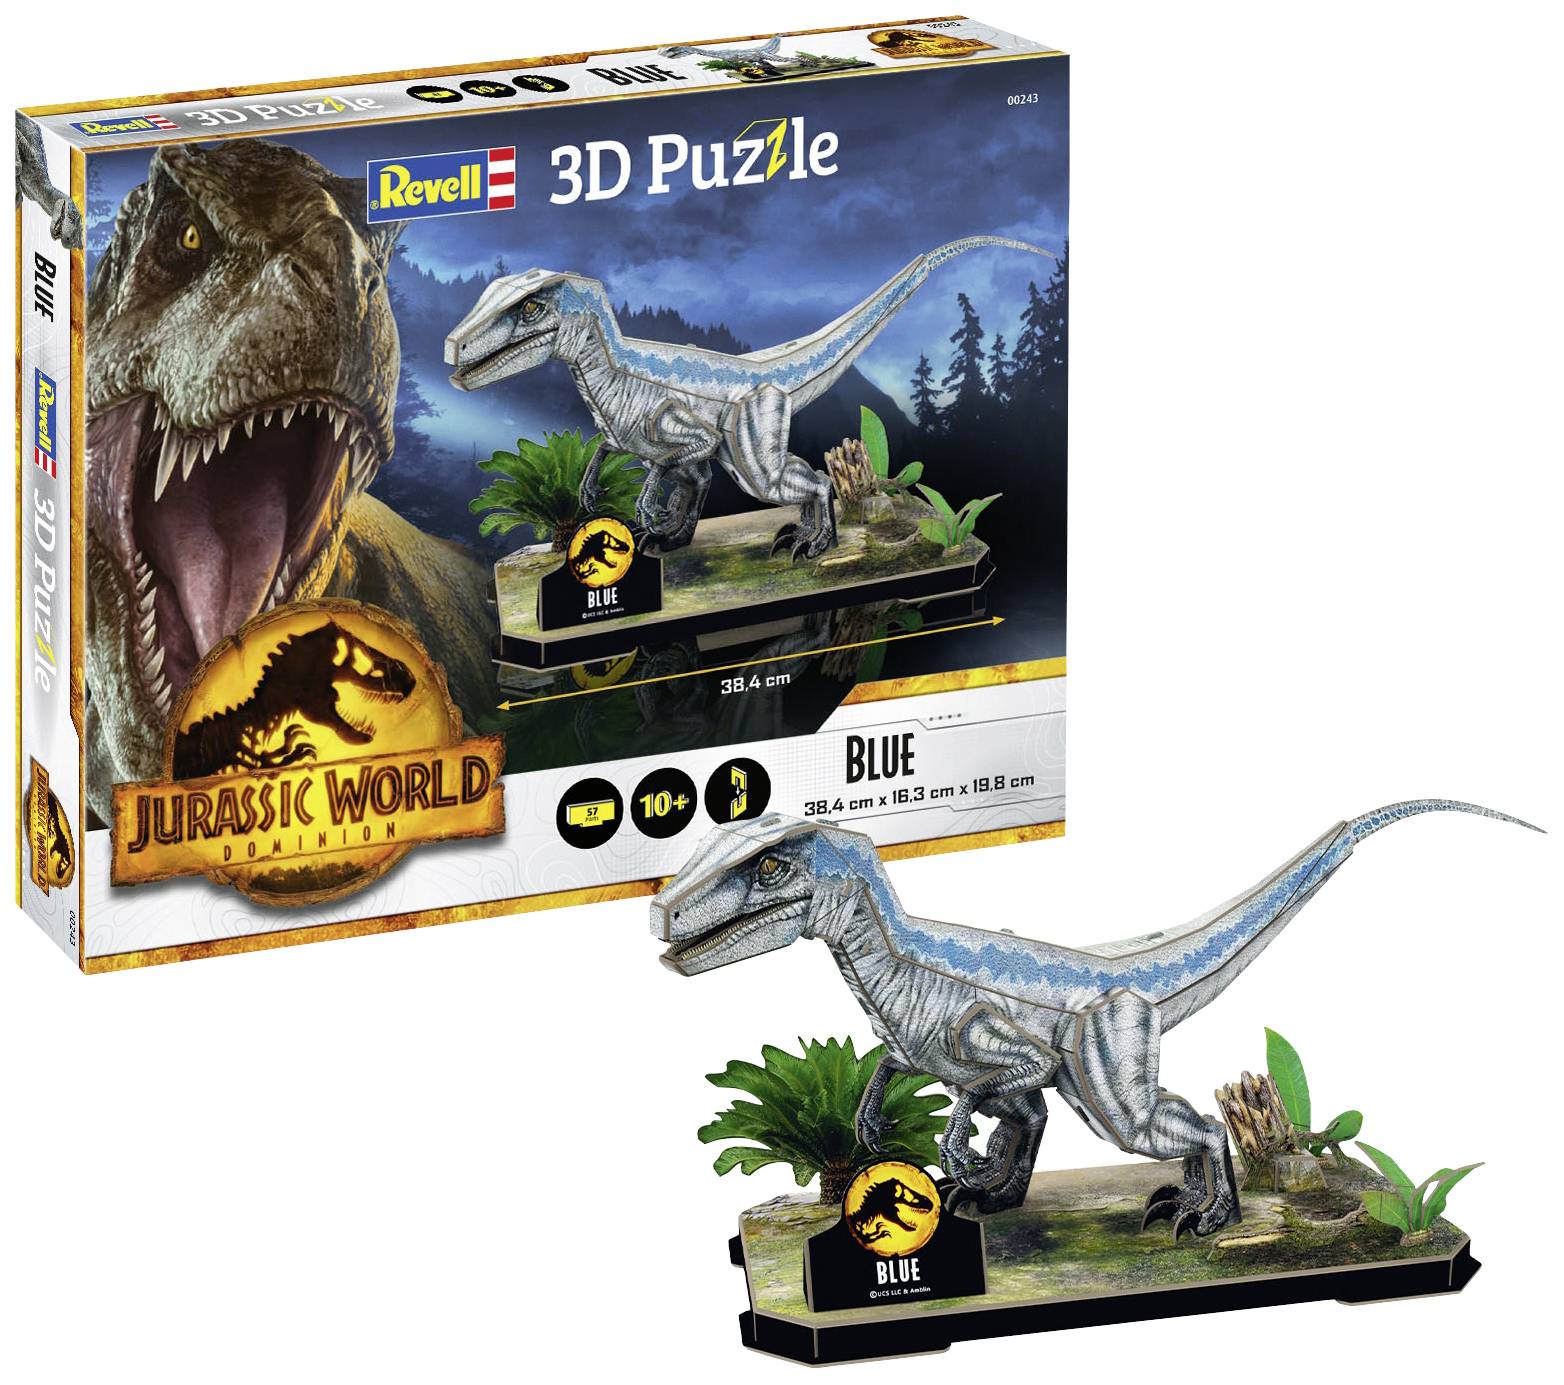 3D Puzzle - Jurassic World Dominion Blue - Loaded Dice